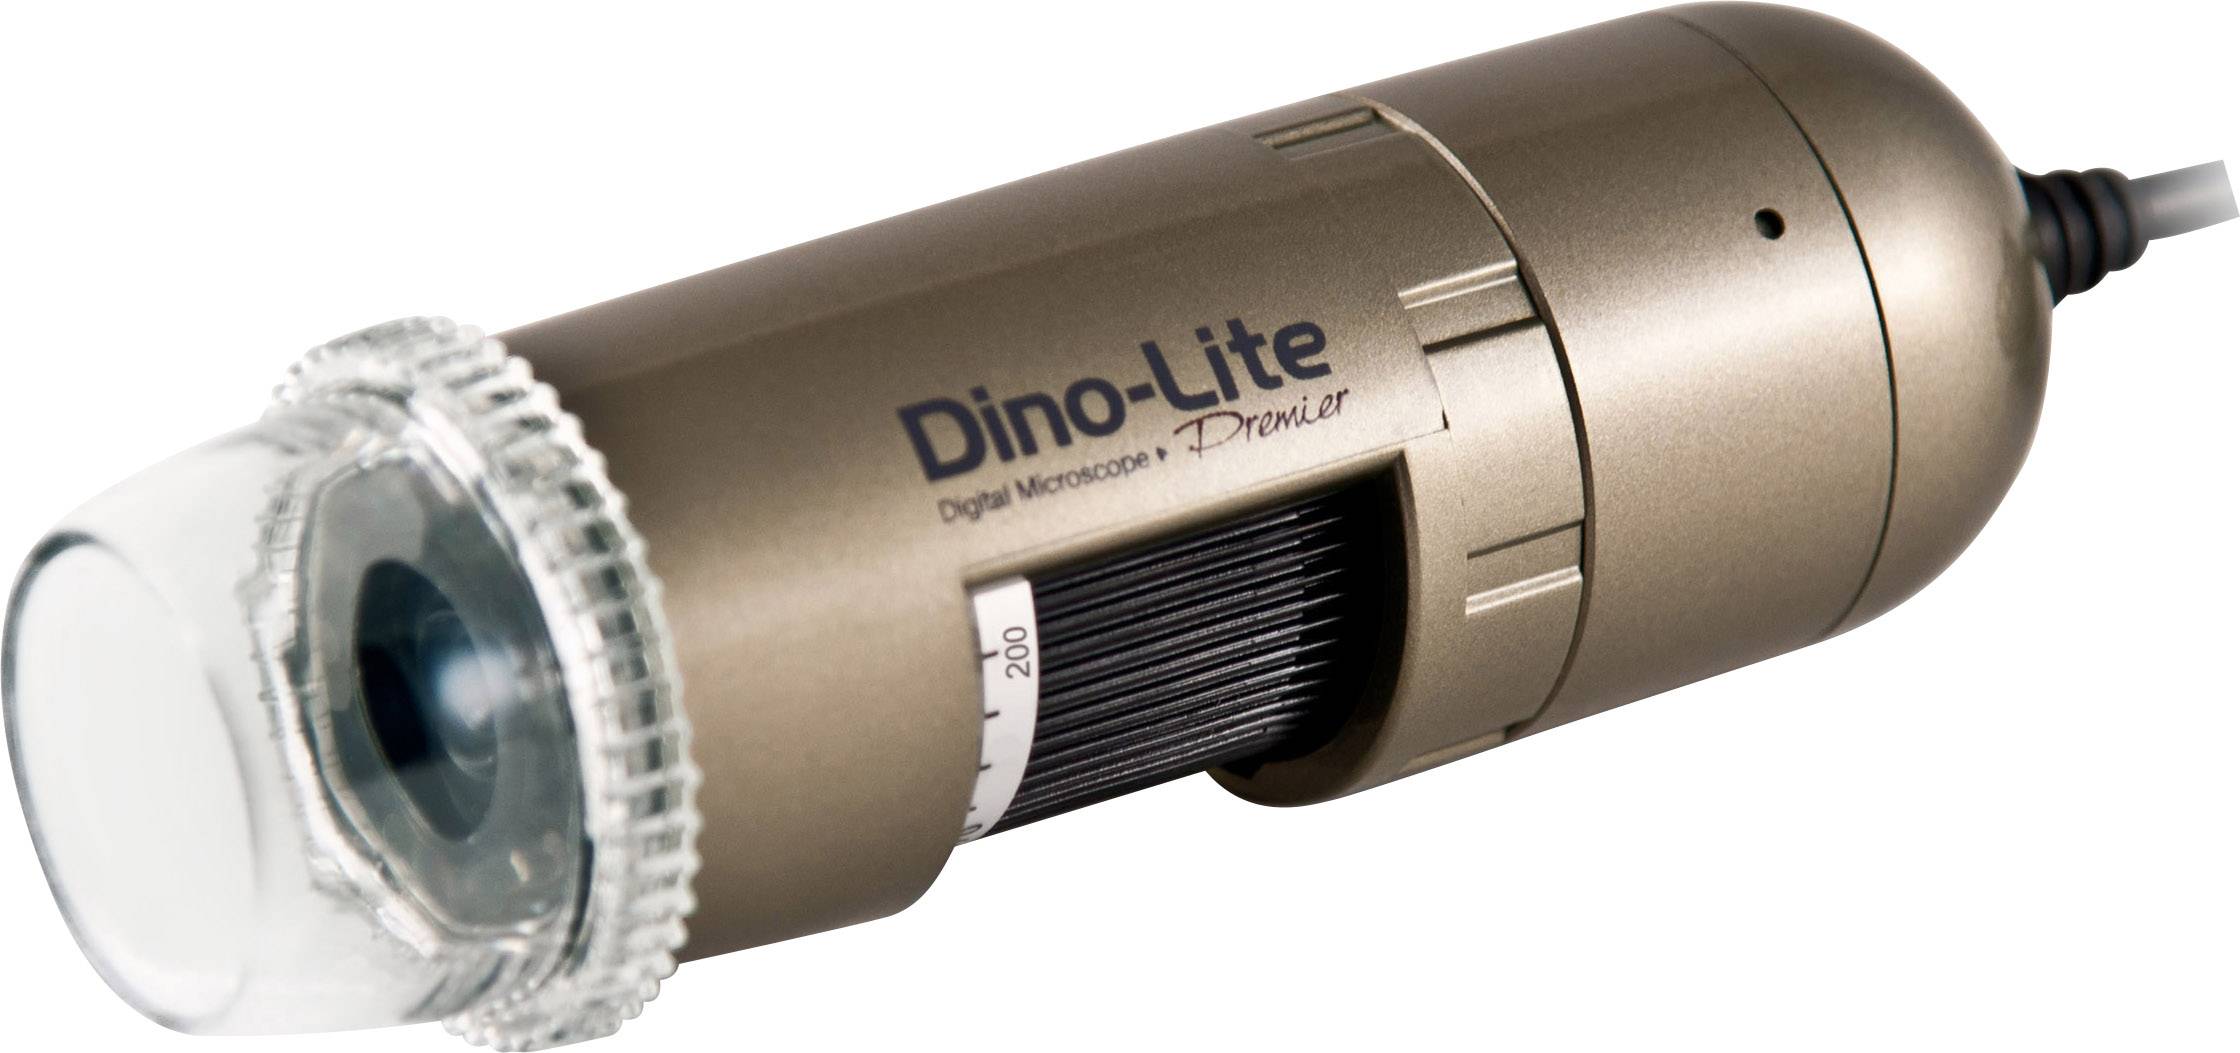 DINO LITE Digitale Mikroskopkamera USB 1.3 Mio. Pixel Vergrößerungsfaktor 10x - 70x 200x. (AM4113ZT)